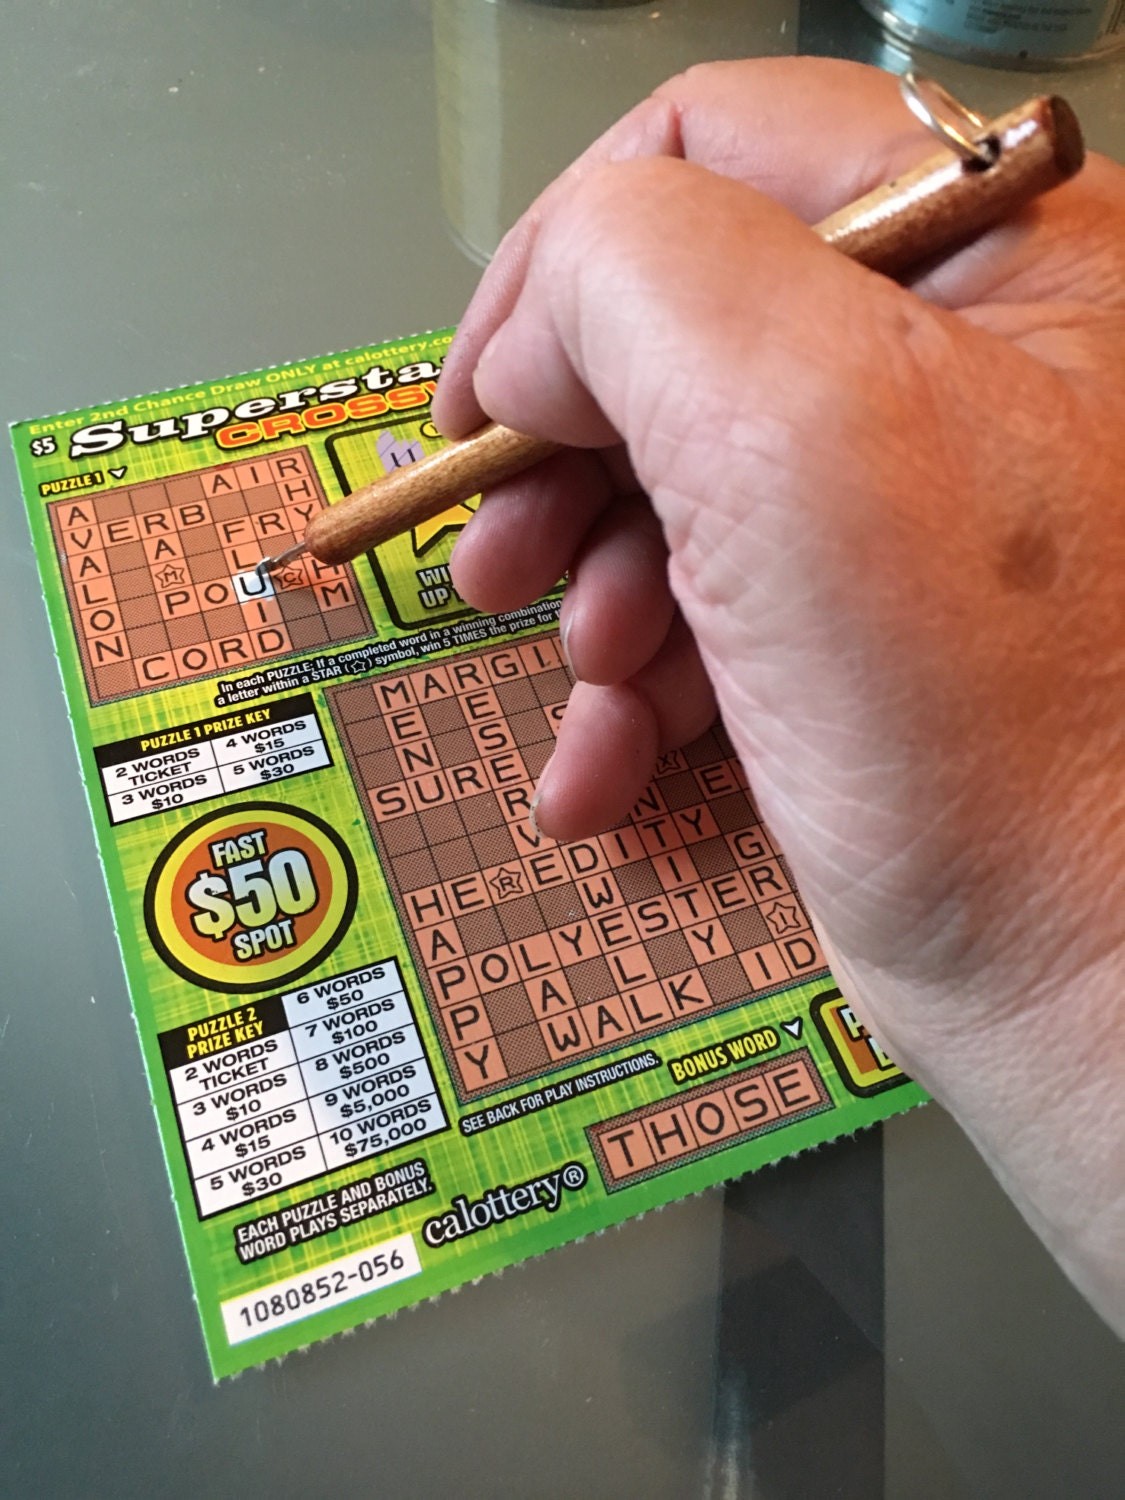 LOTTO 7 SCRATCHER, Lottery Scratch-off tool, TM & C 2013, Pat. Pend.